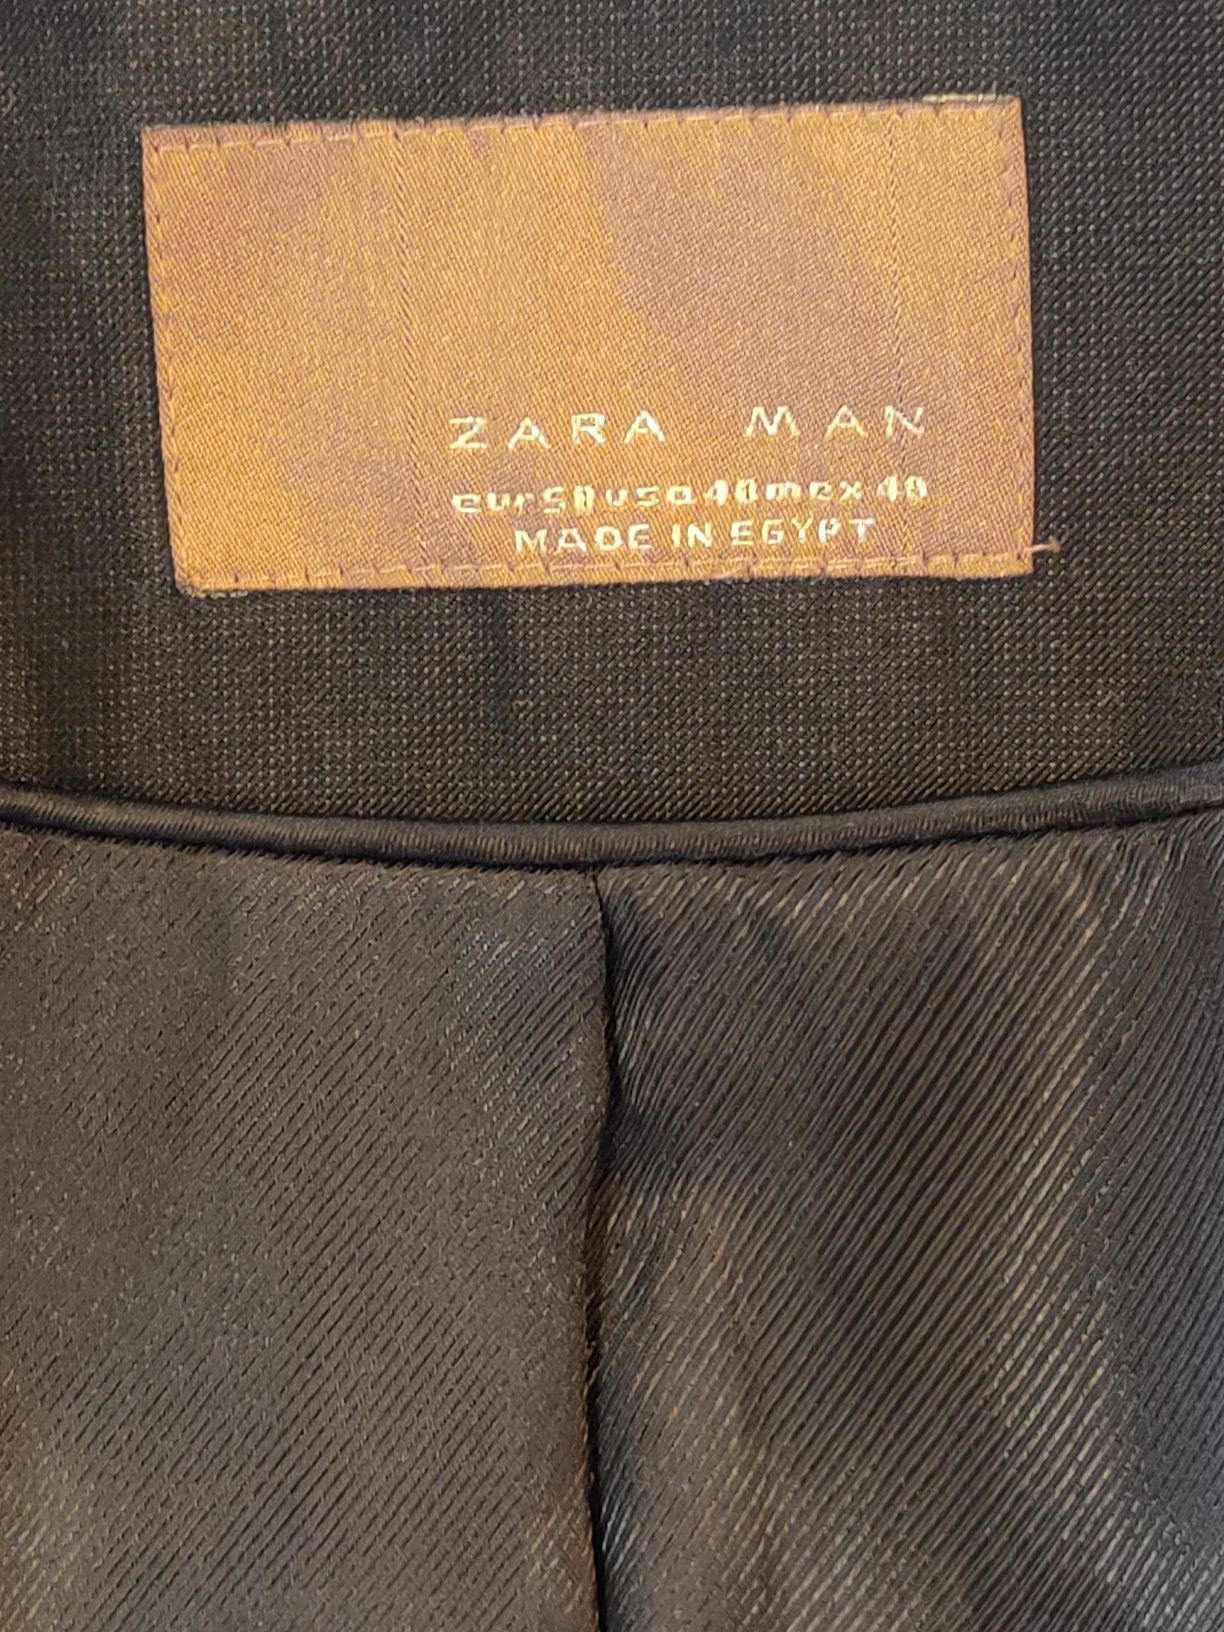 Brązowy garnitur męski marki Zara